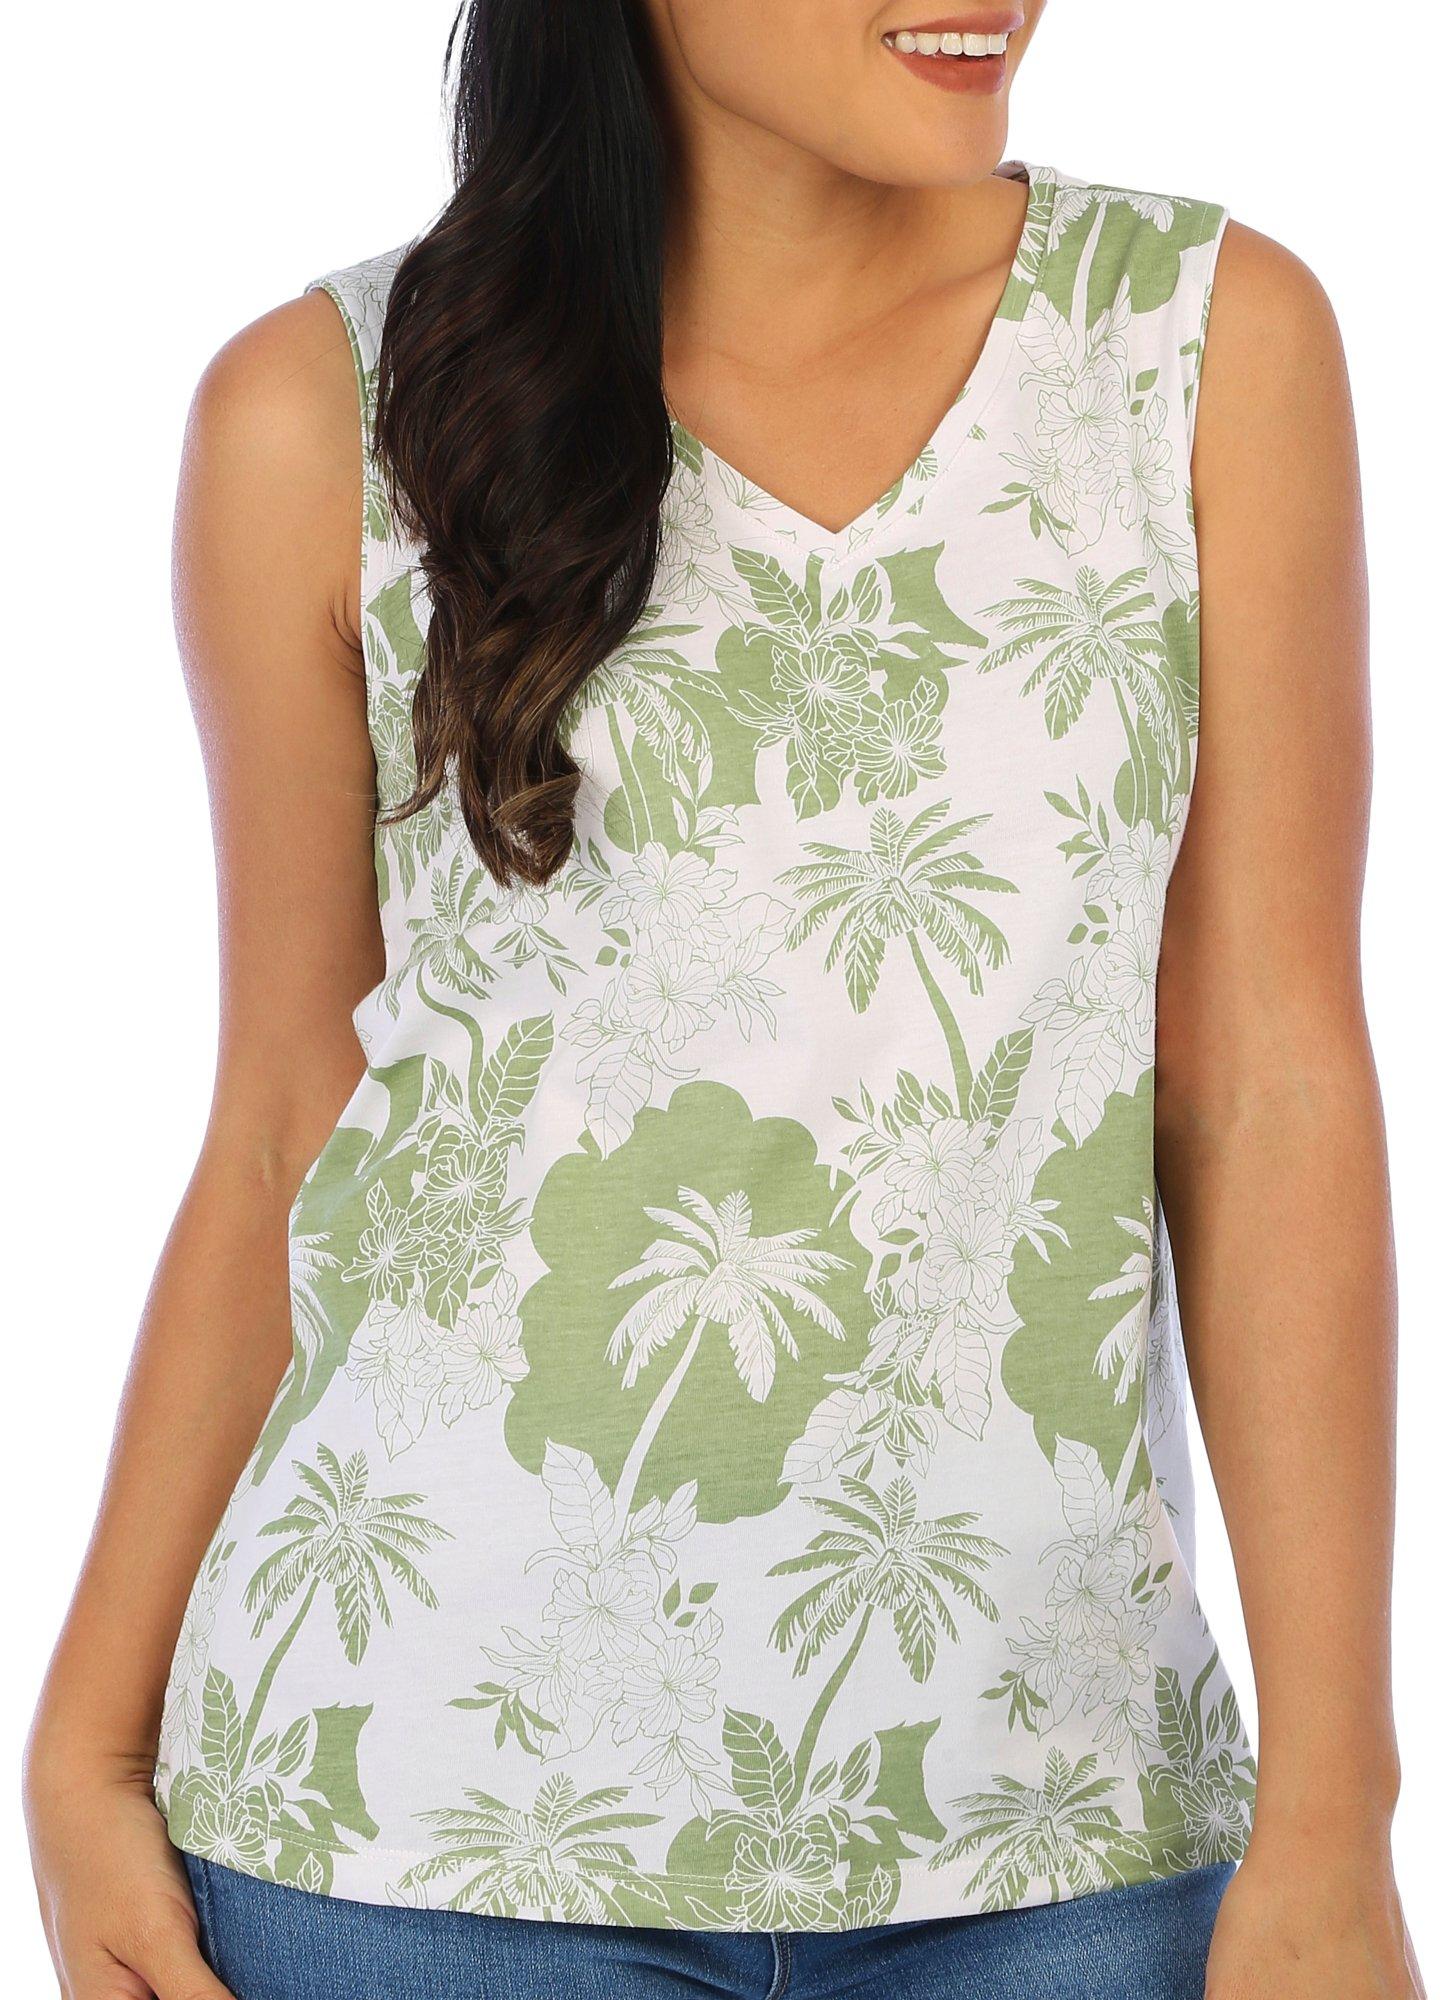 Coral Bay Womens Floral & Palm Print V-Neck